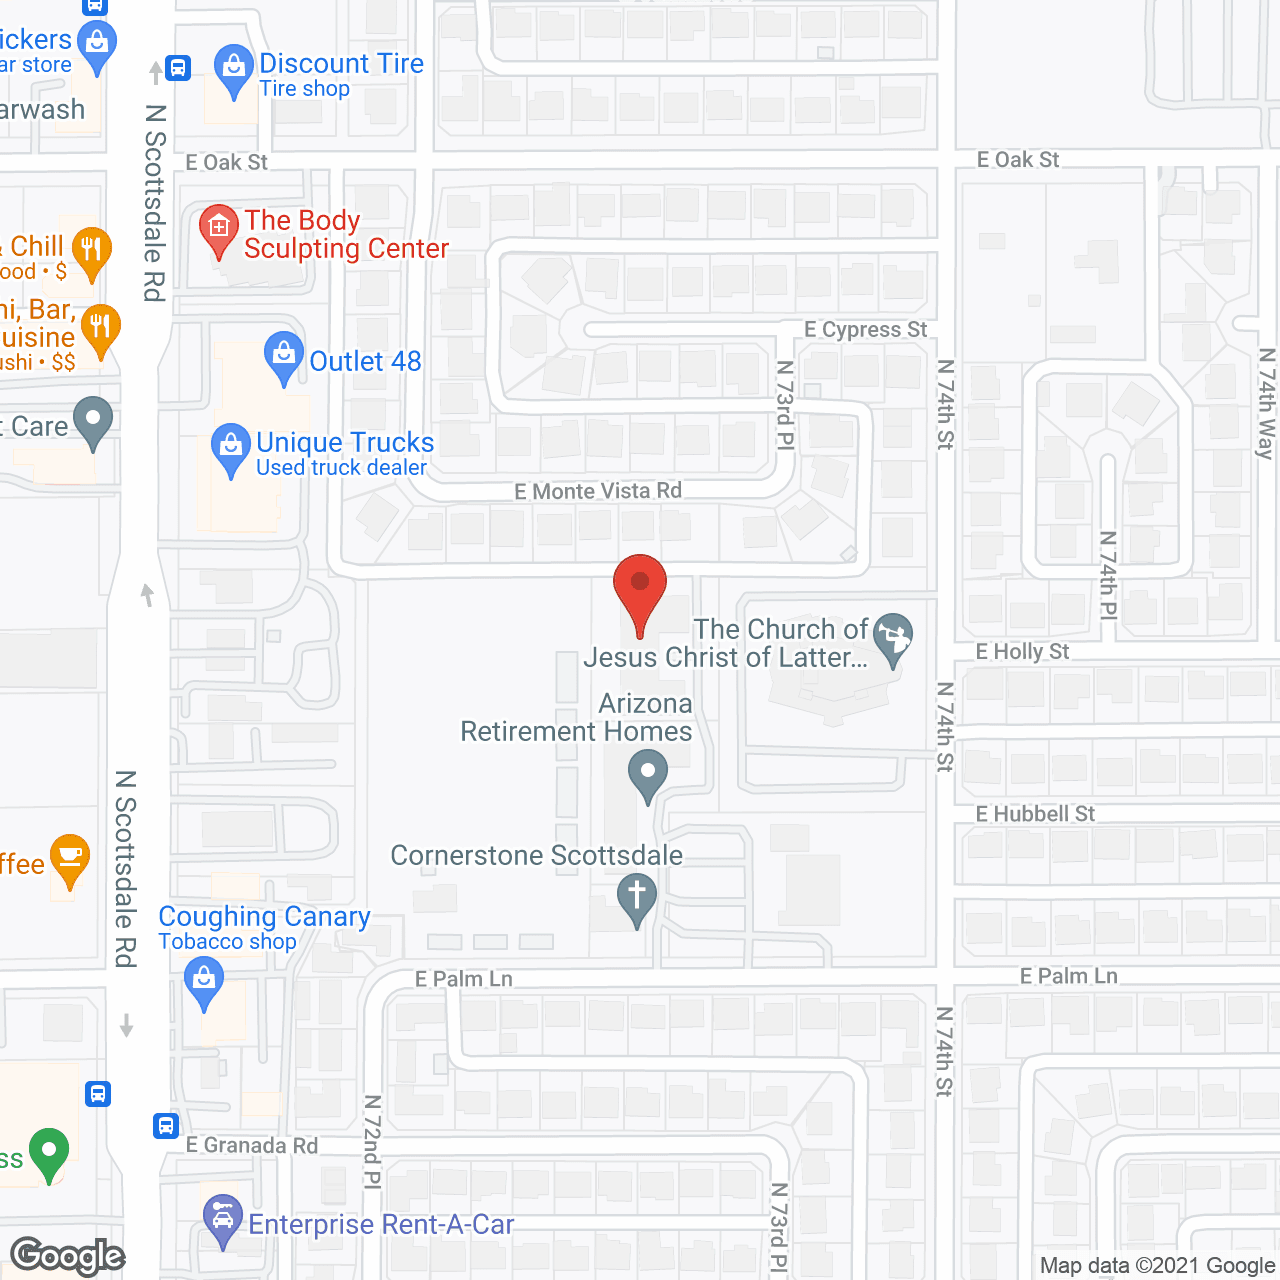 Arizona Retirement Homes in google map